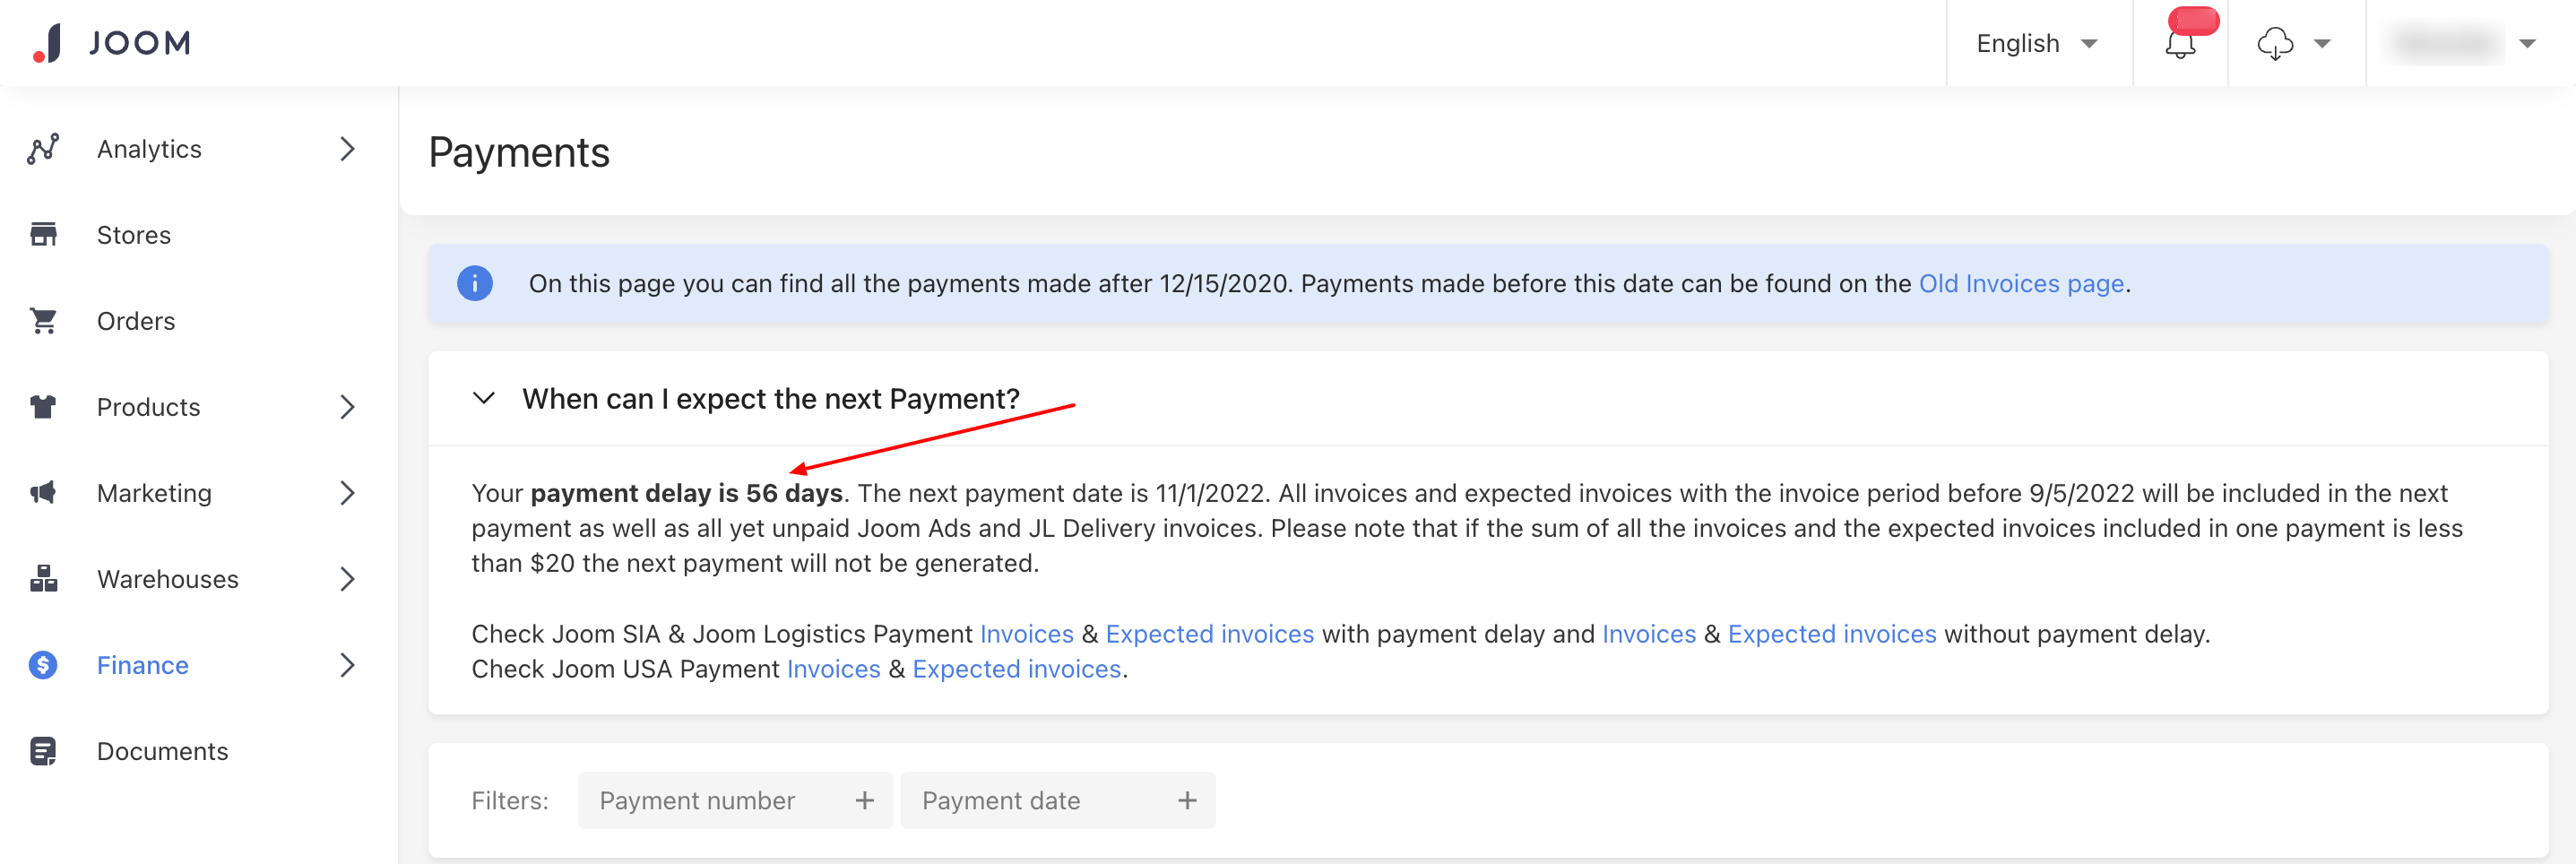 Payments-_-Joom.png